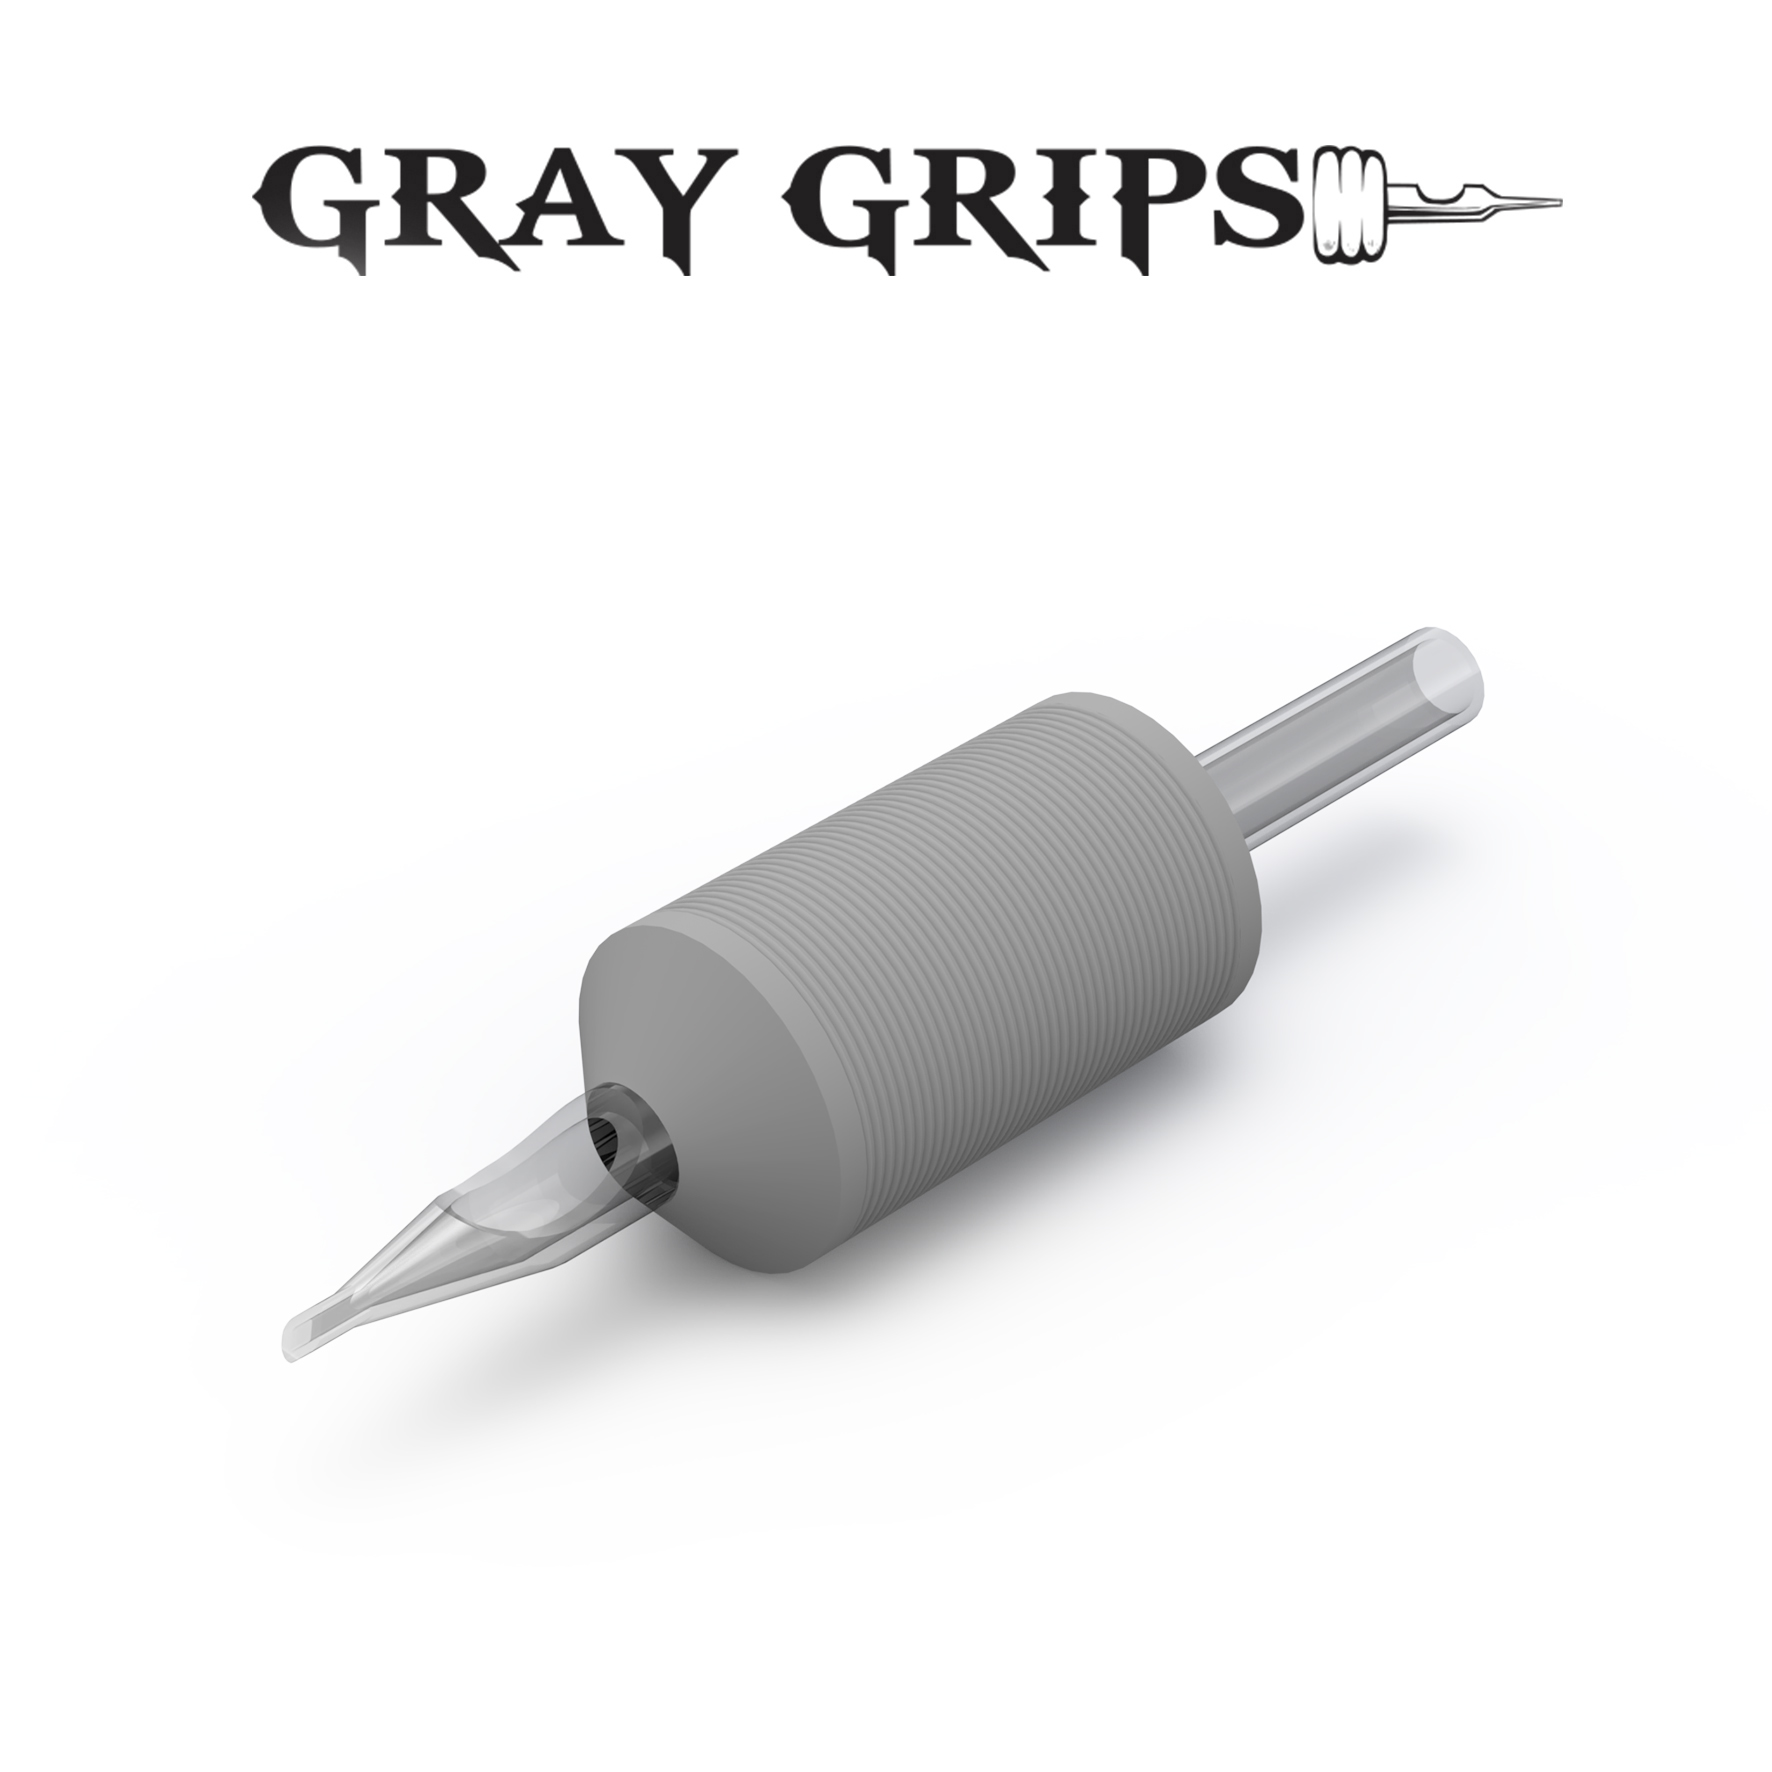 GRAY GRIPS™